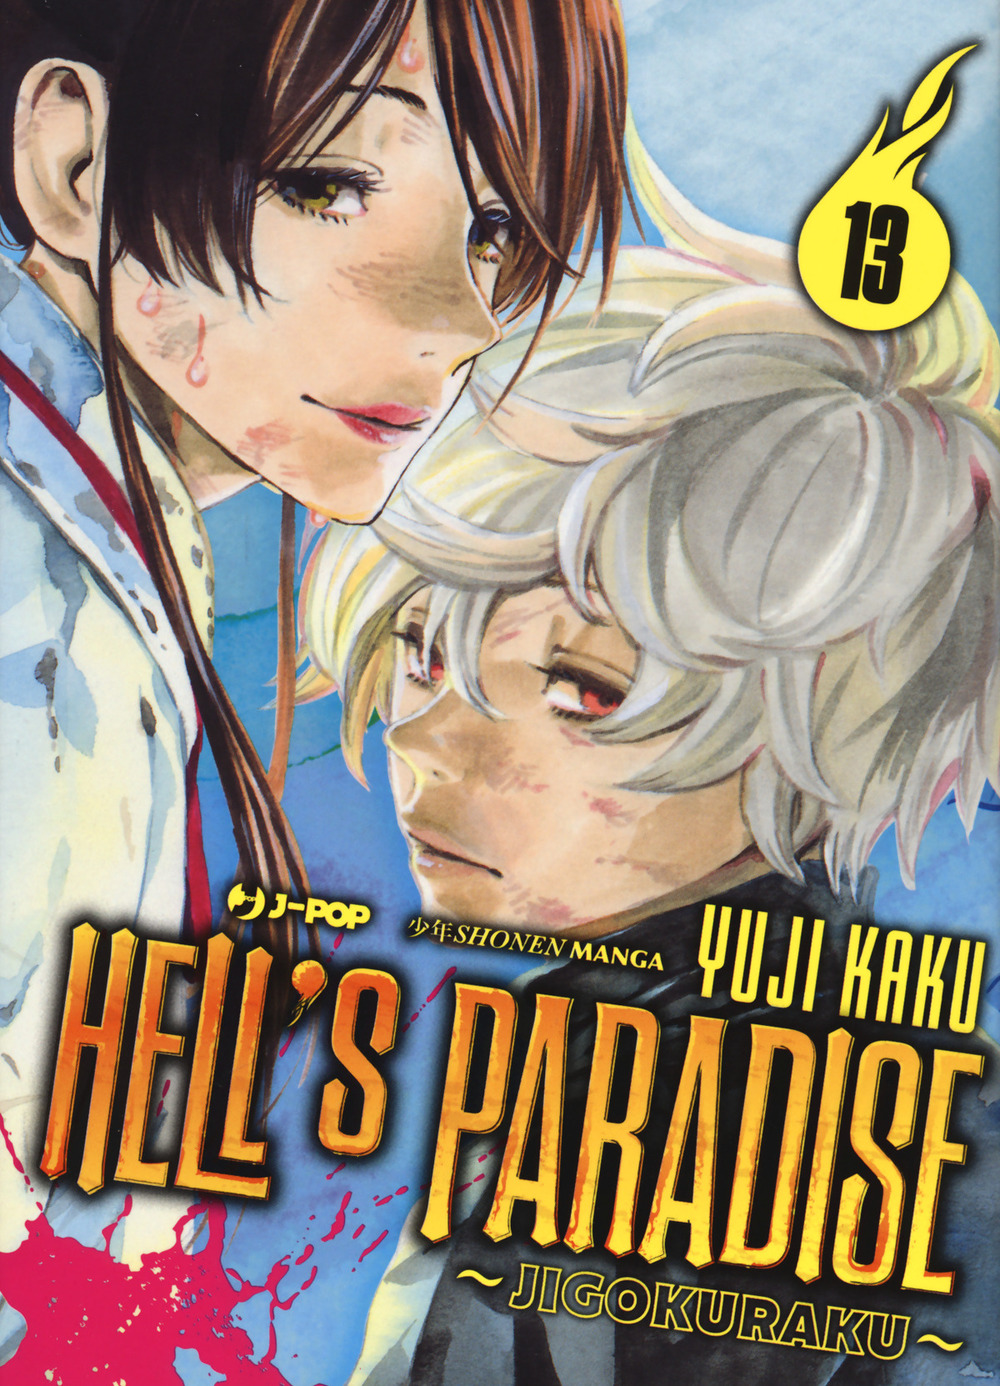 Hell's paradise. Jigokuraku. Vol. 13